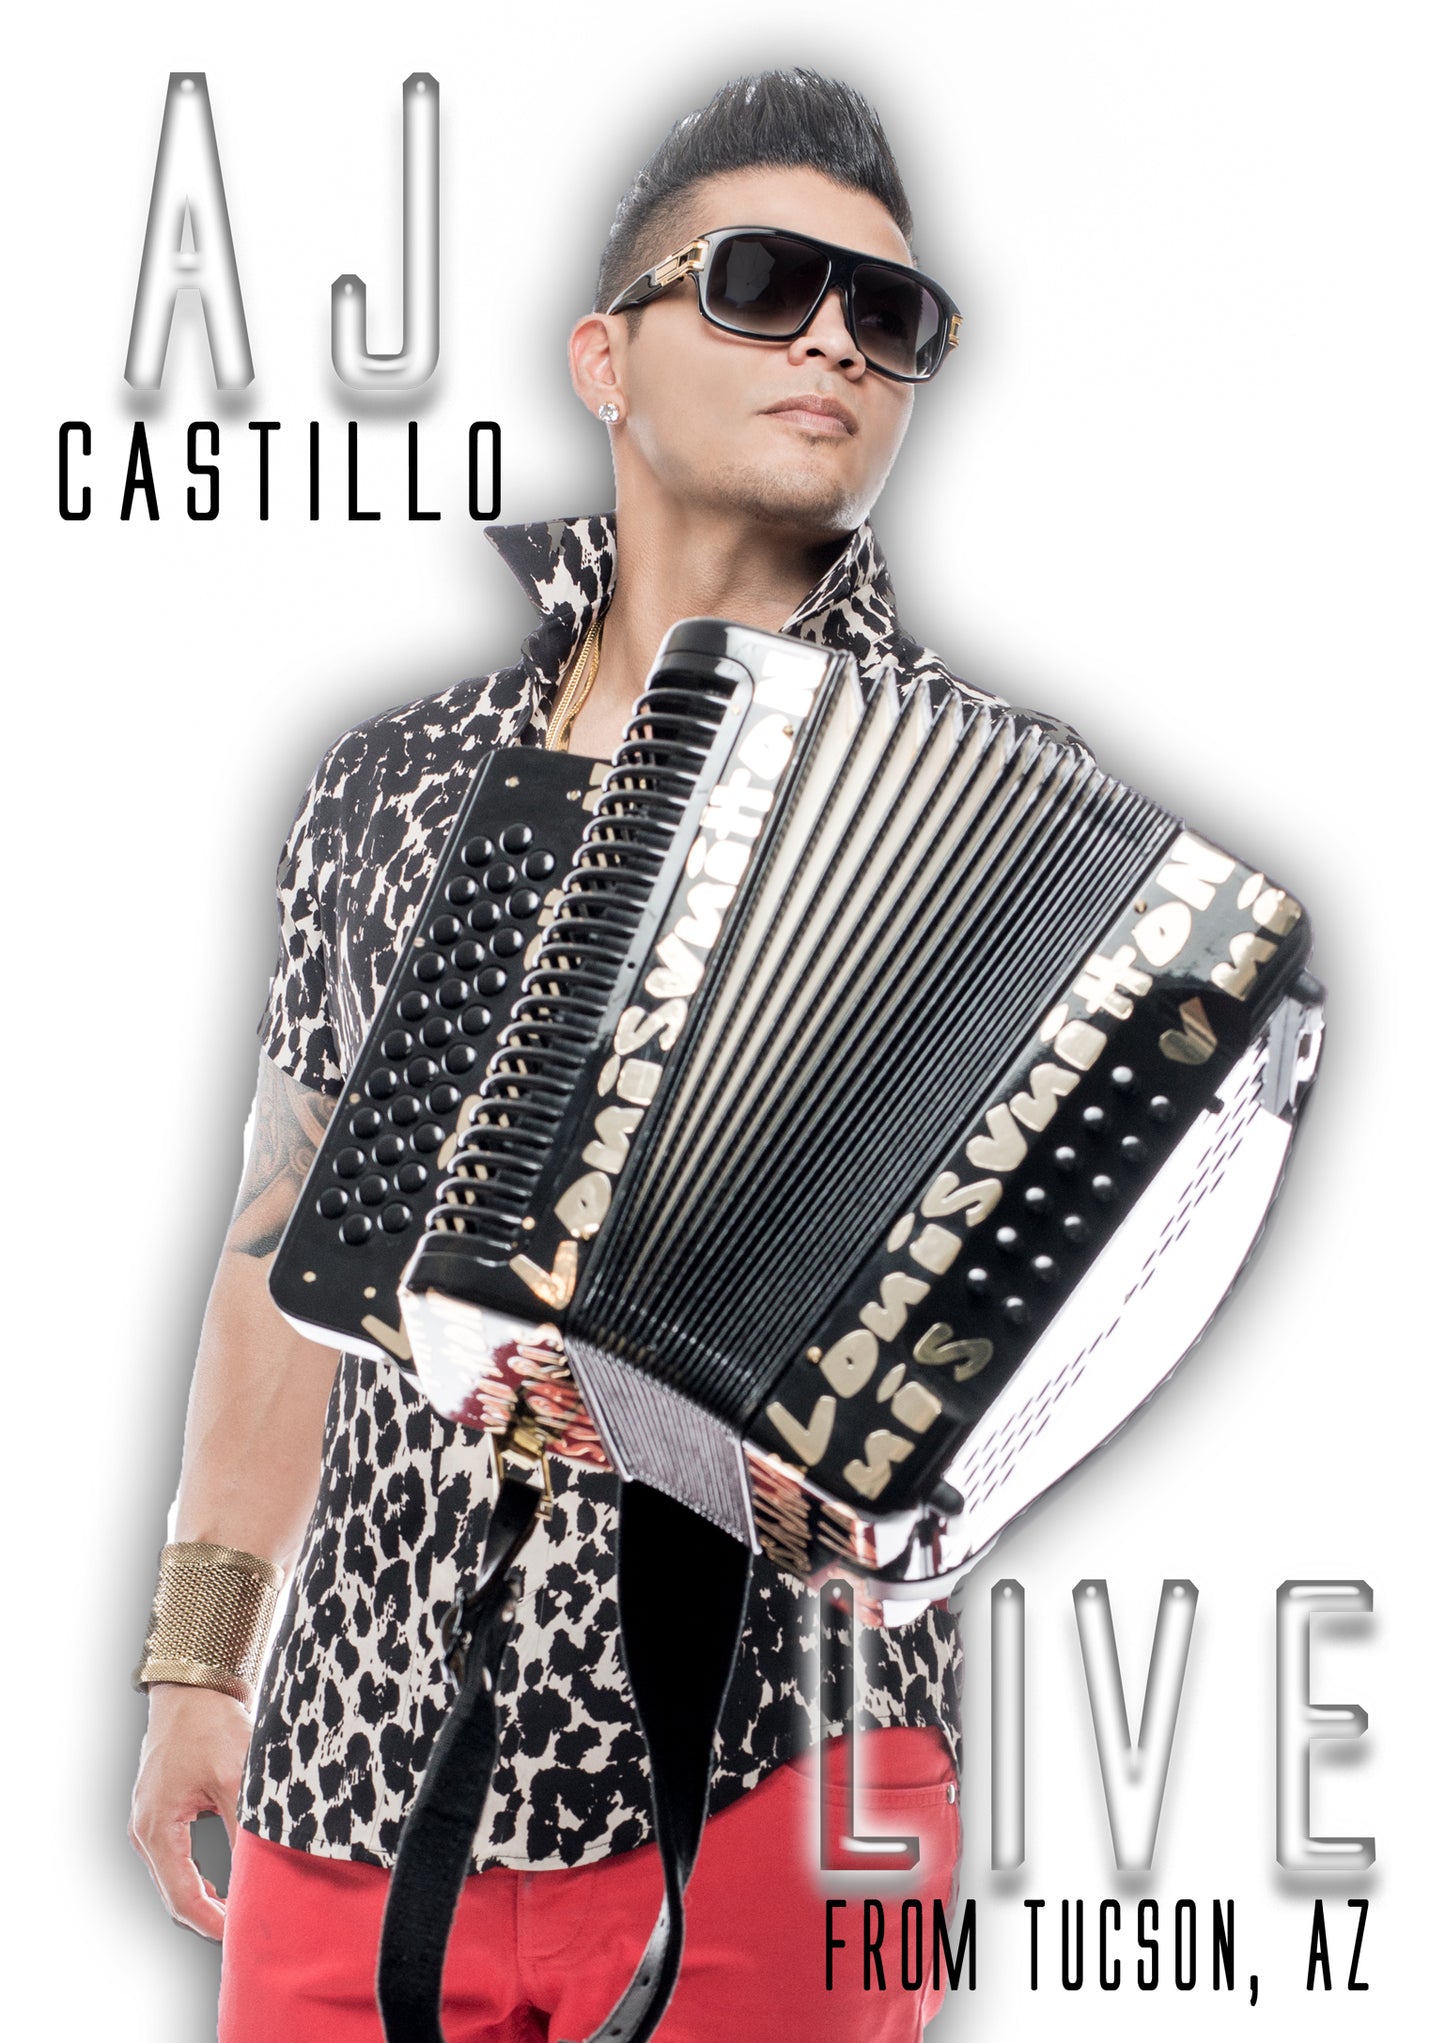 AJ Castillo - Live From Tucson, AZ (DVD)